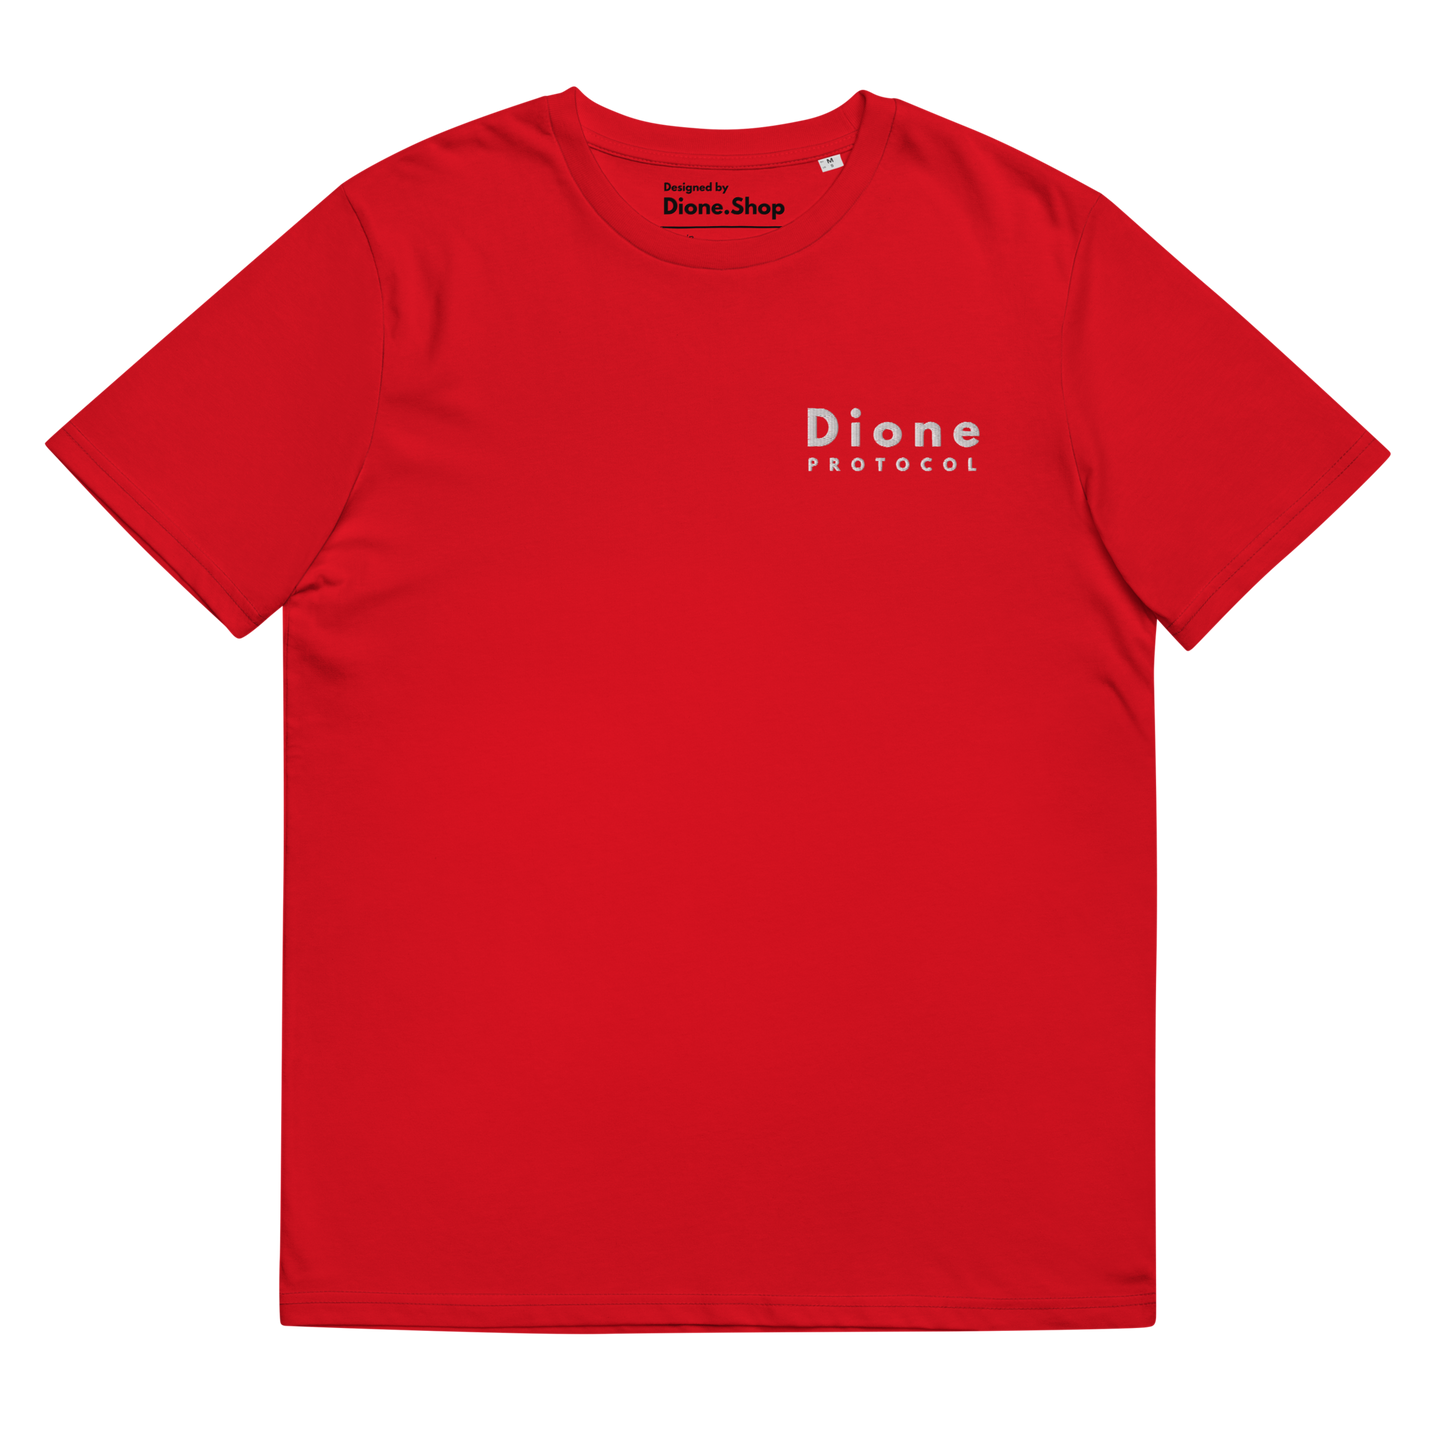 T-Shirt - Dione V1.0 - Red - Premium